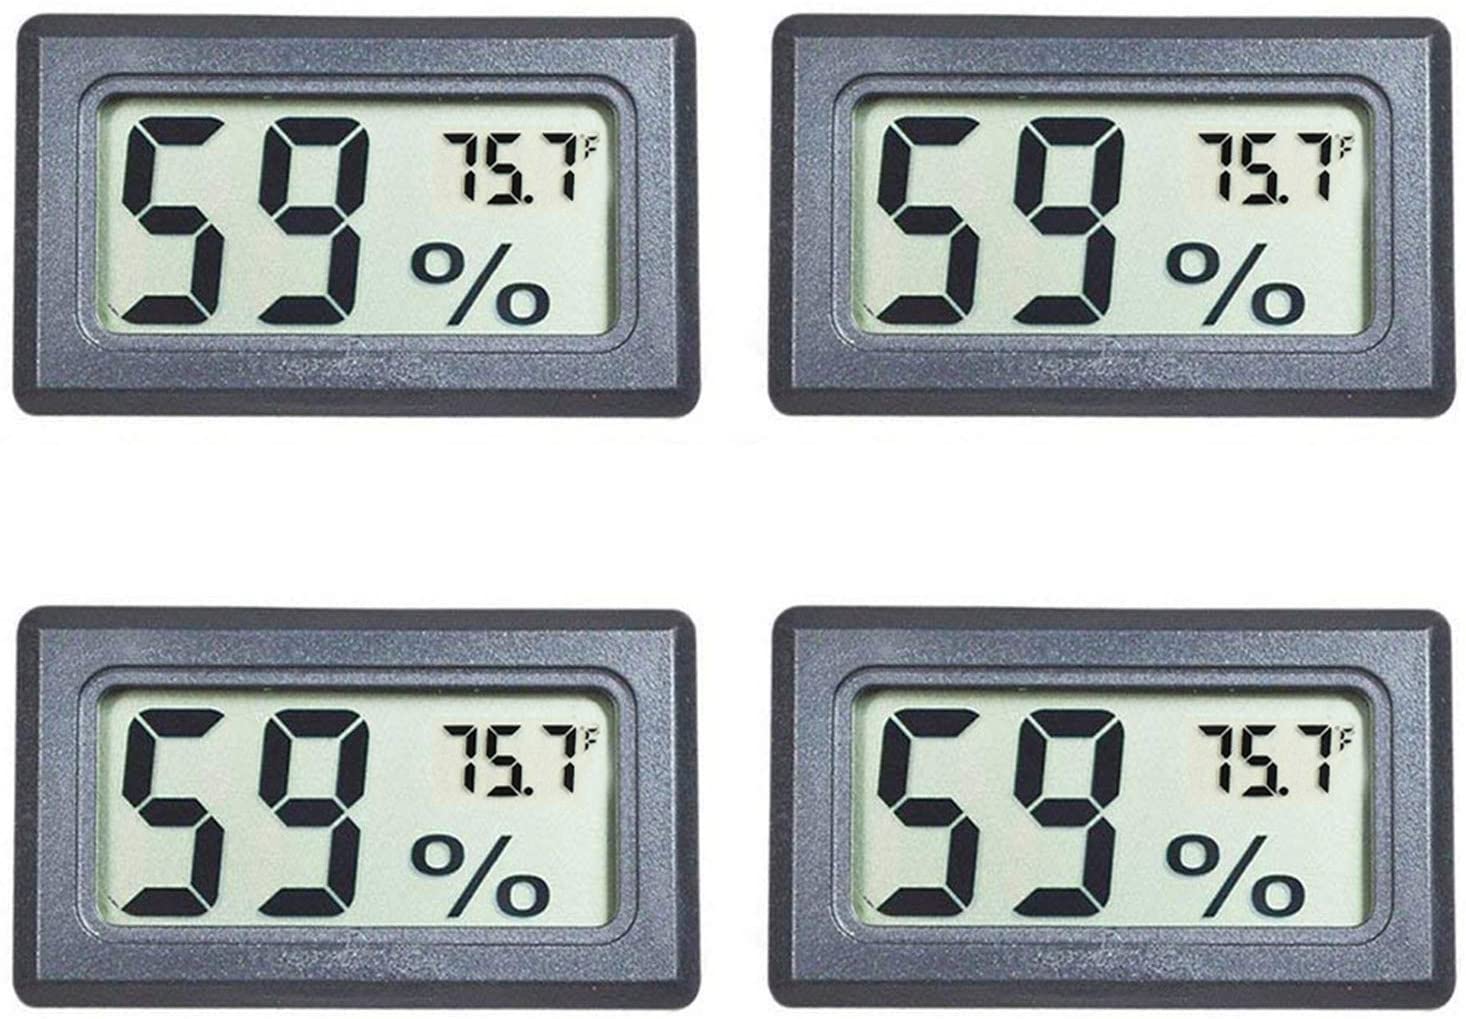 Veanic Mini Digital Electronic Temperature Humidity Meters